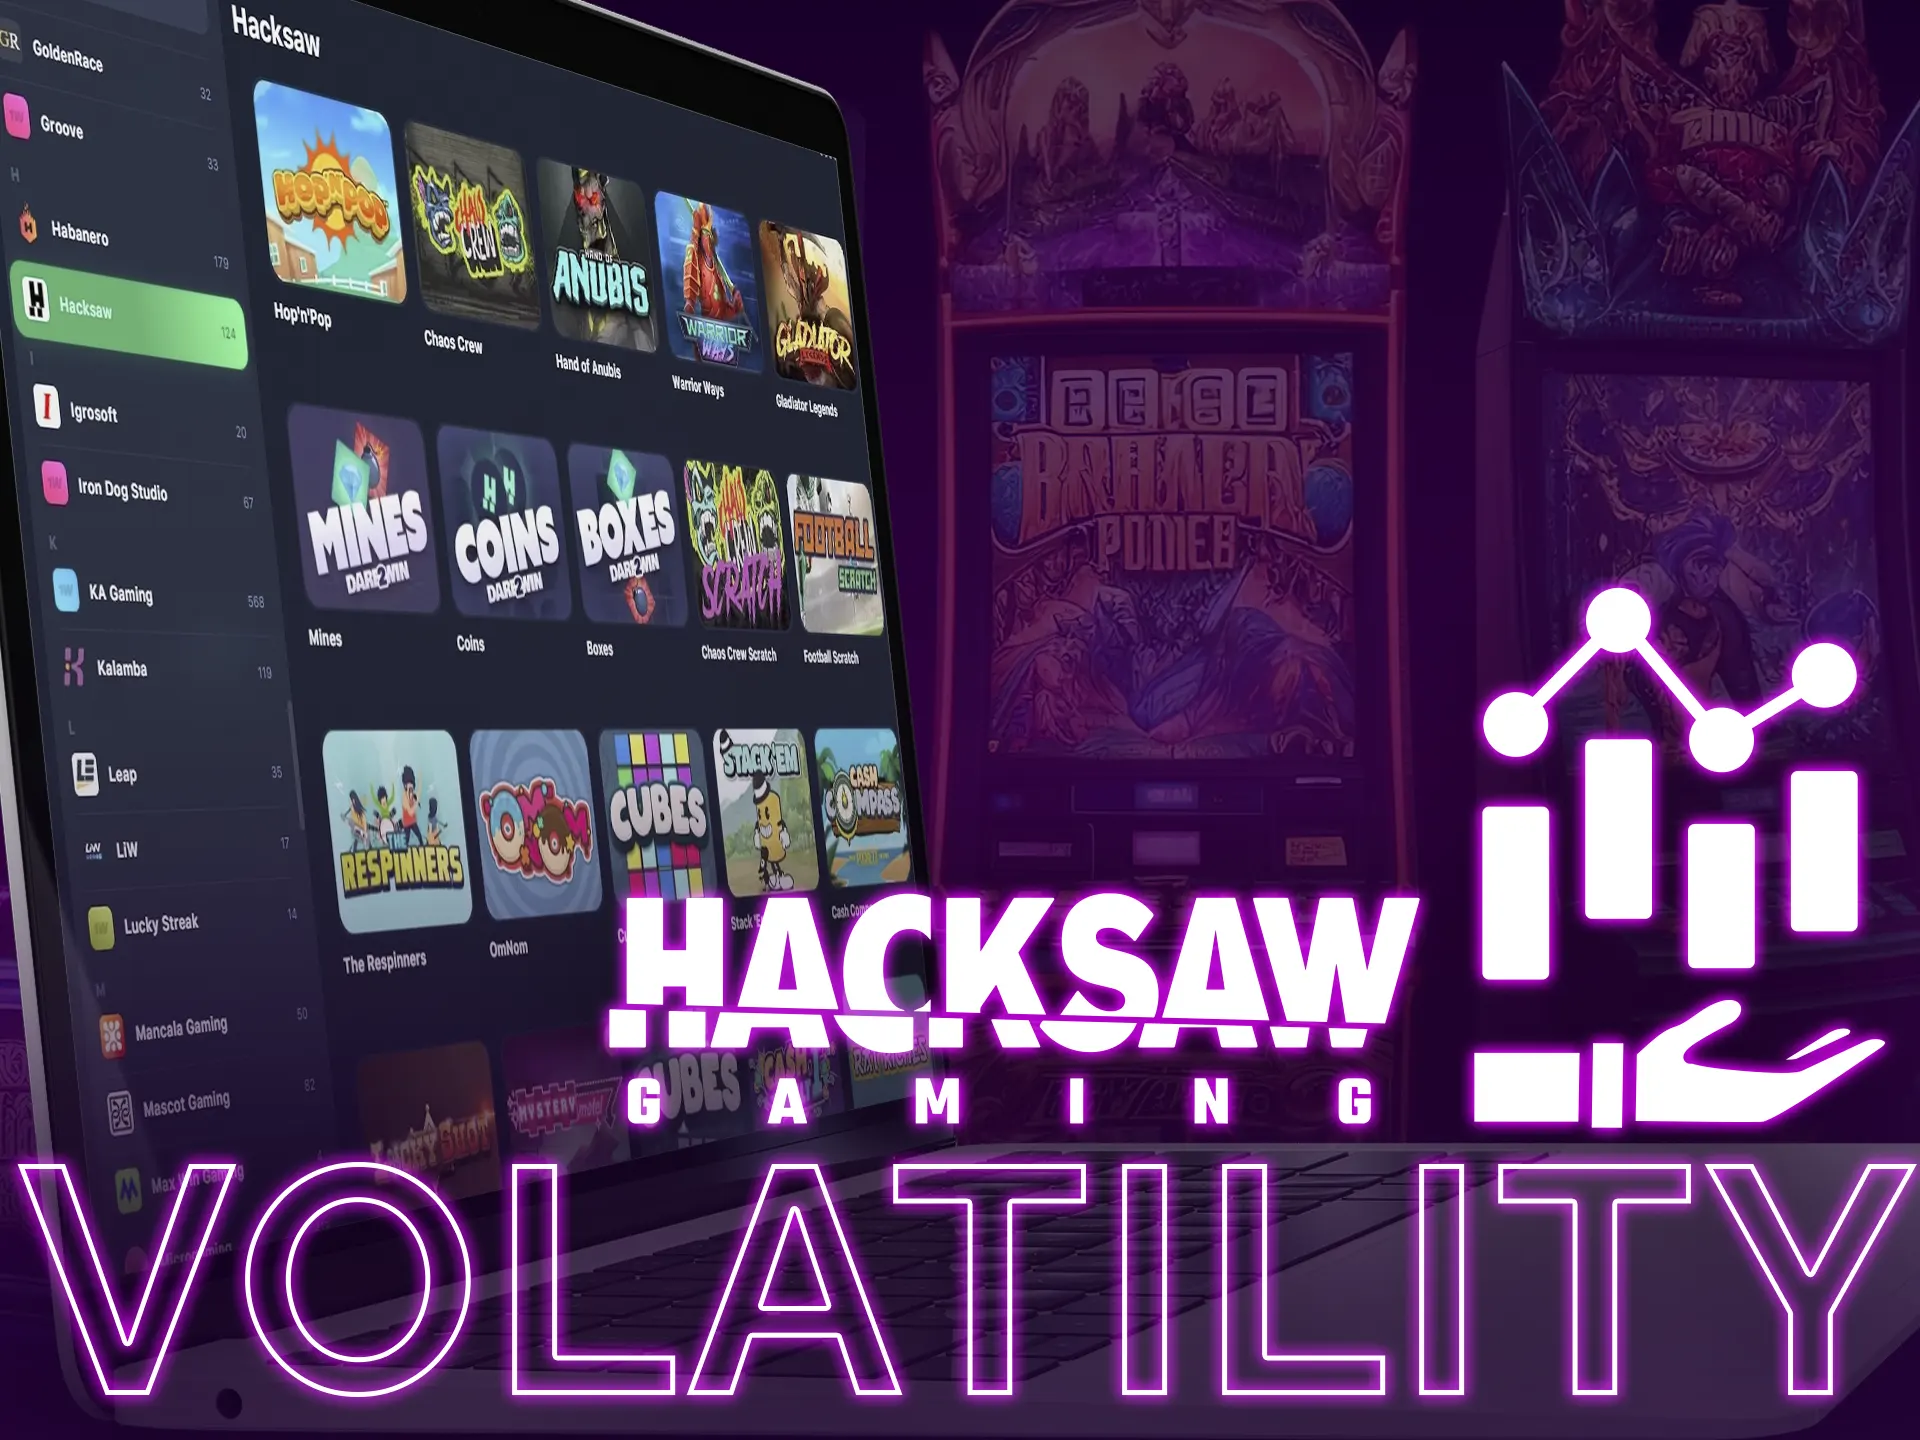 Hacksaw Gaming slots offer medium to high volatility for big wins.